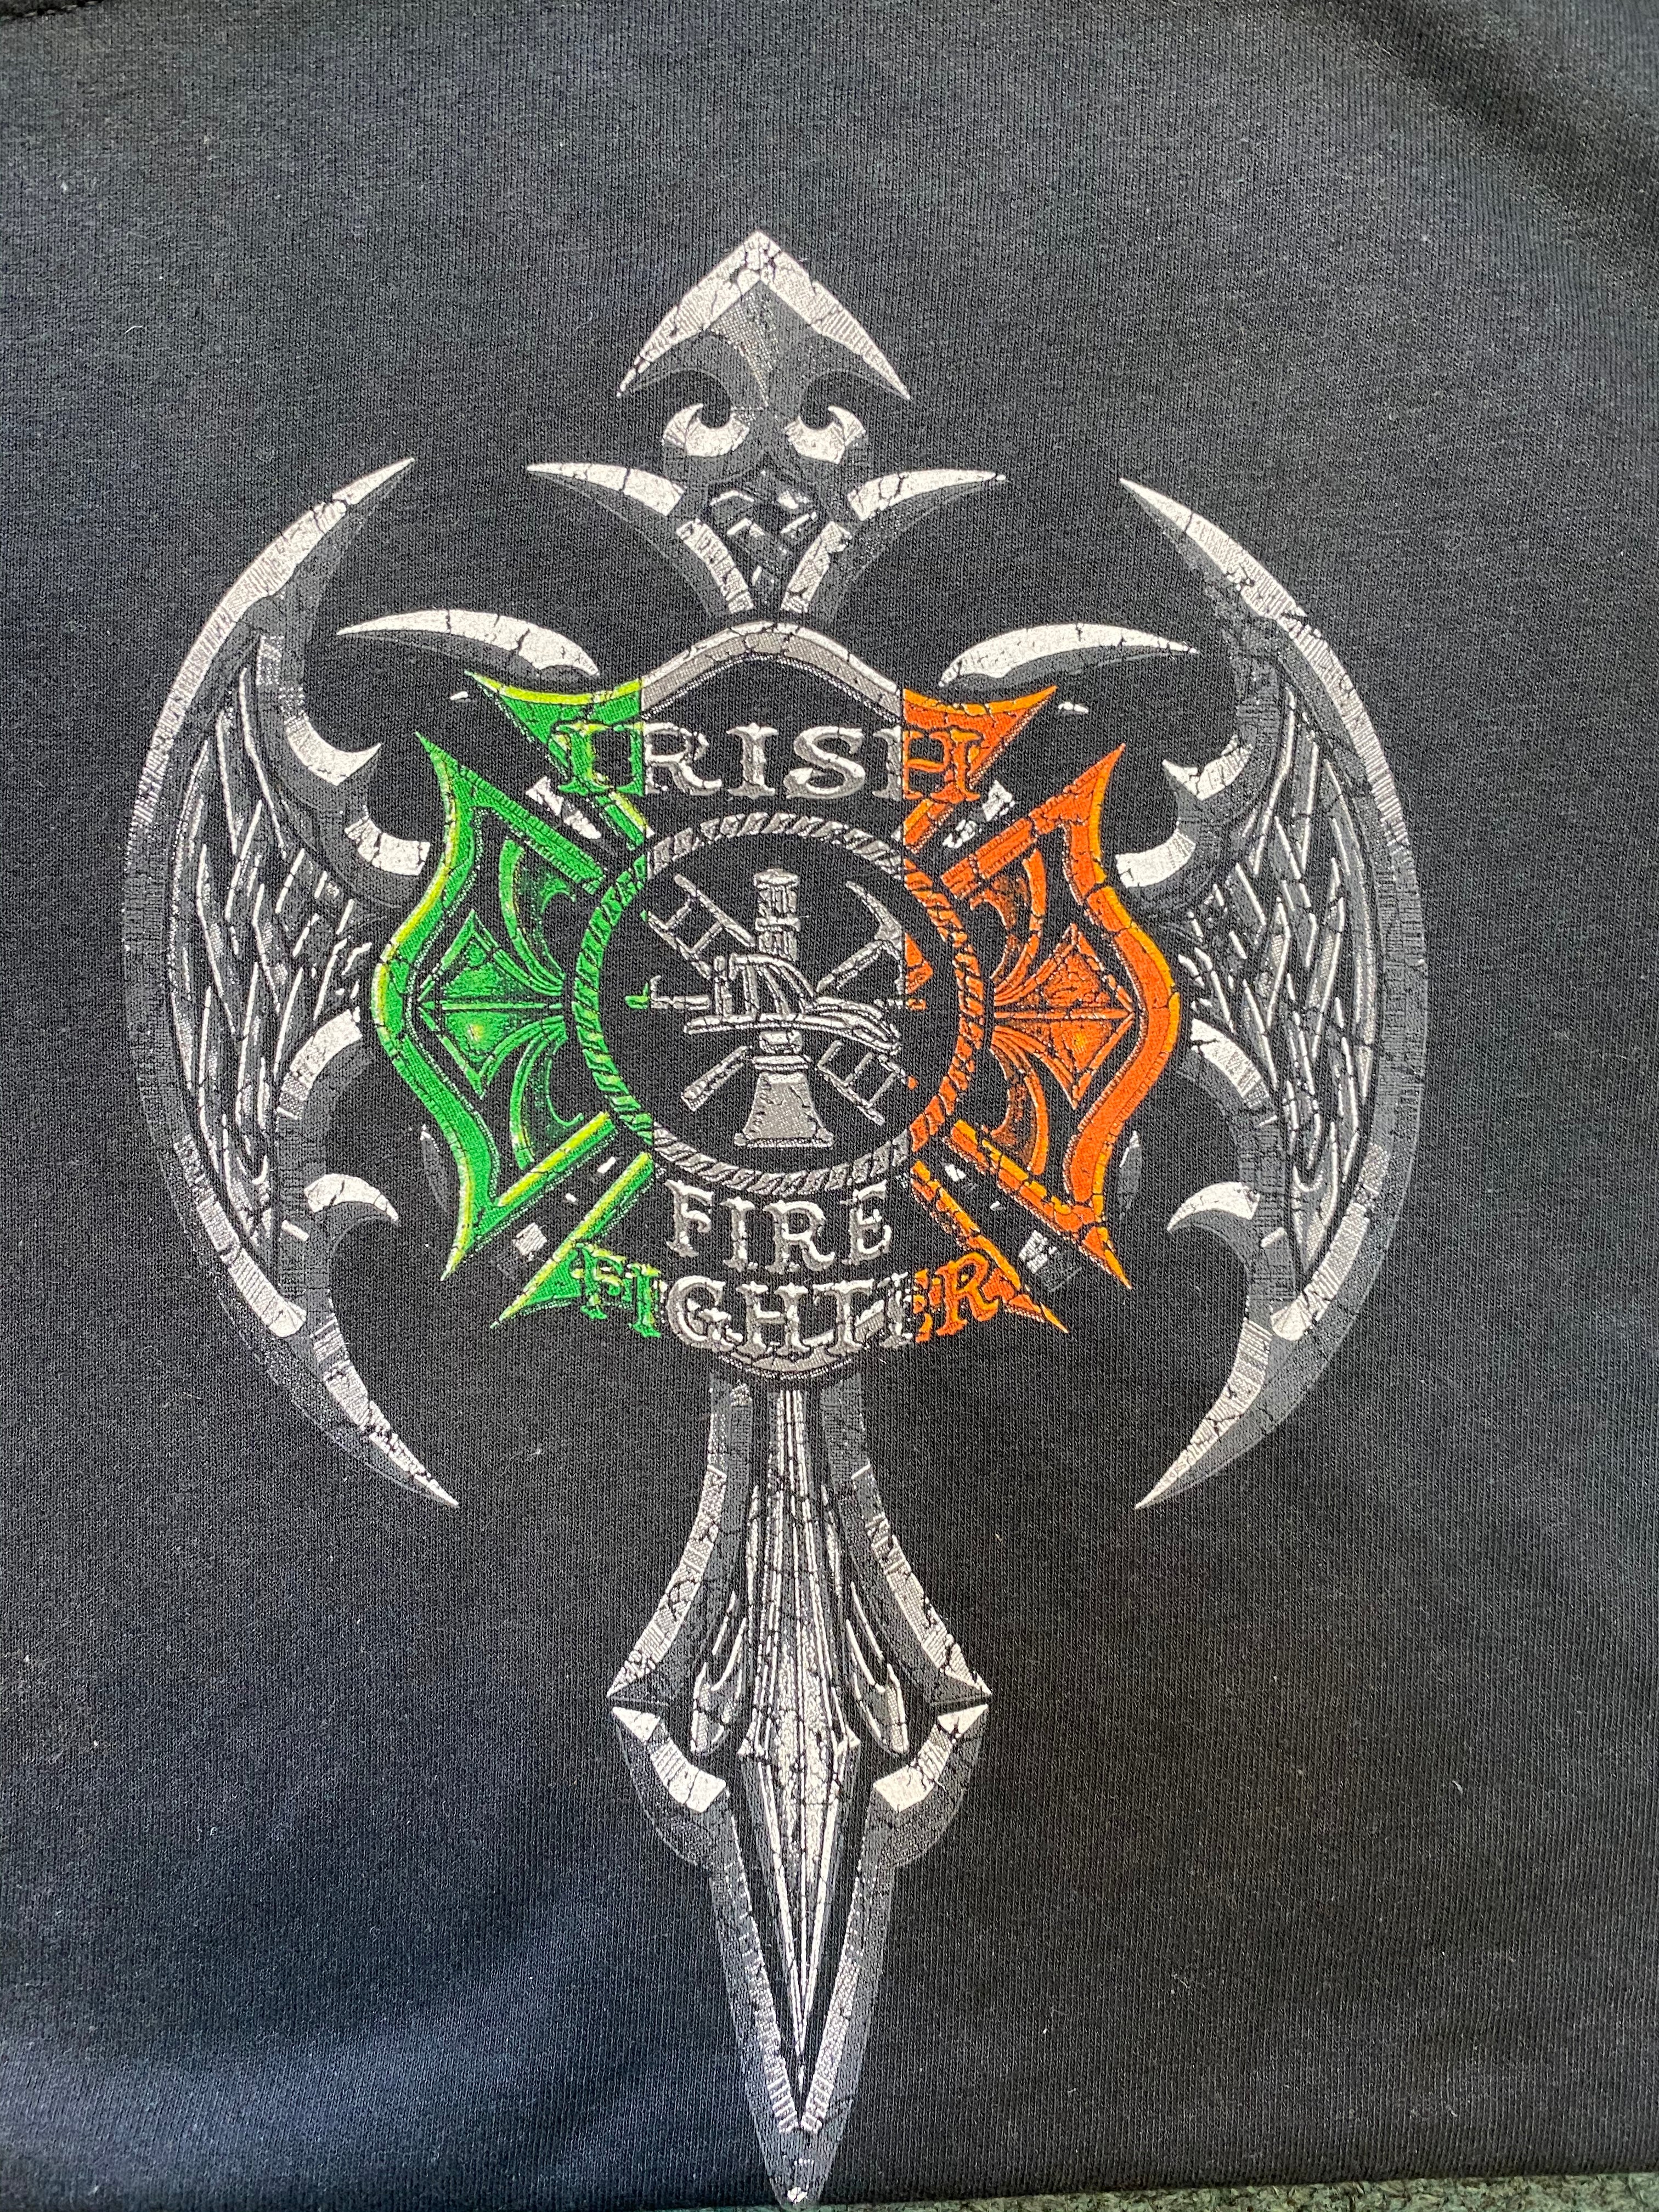 Irish fire fighter shirt